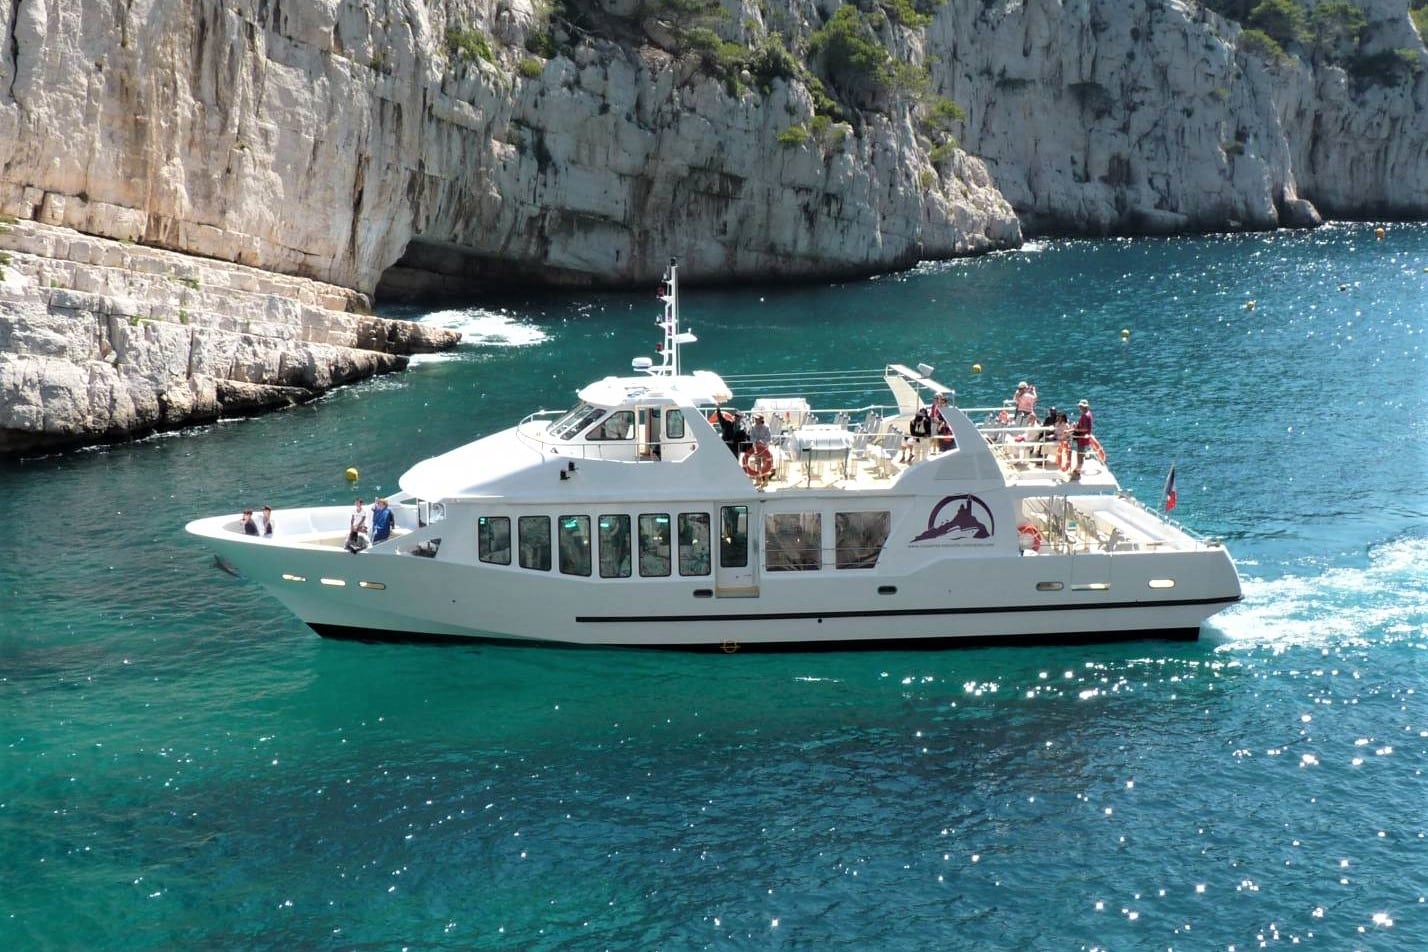 navires, Les navires touristiques des calanques passent au vert, Made in Marseille